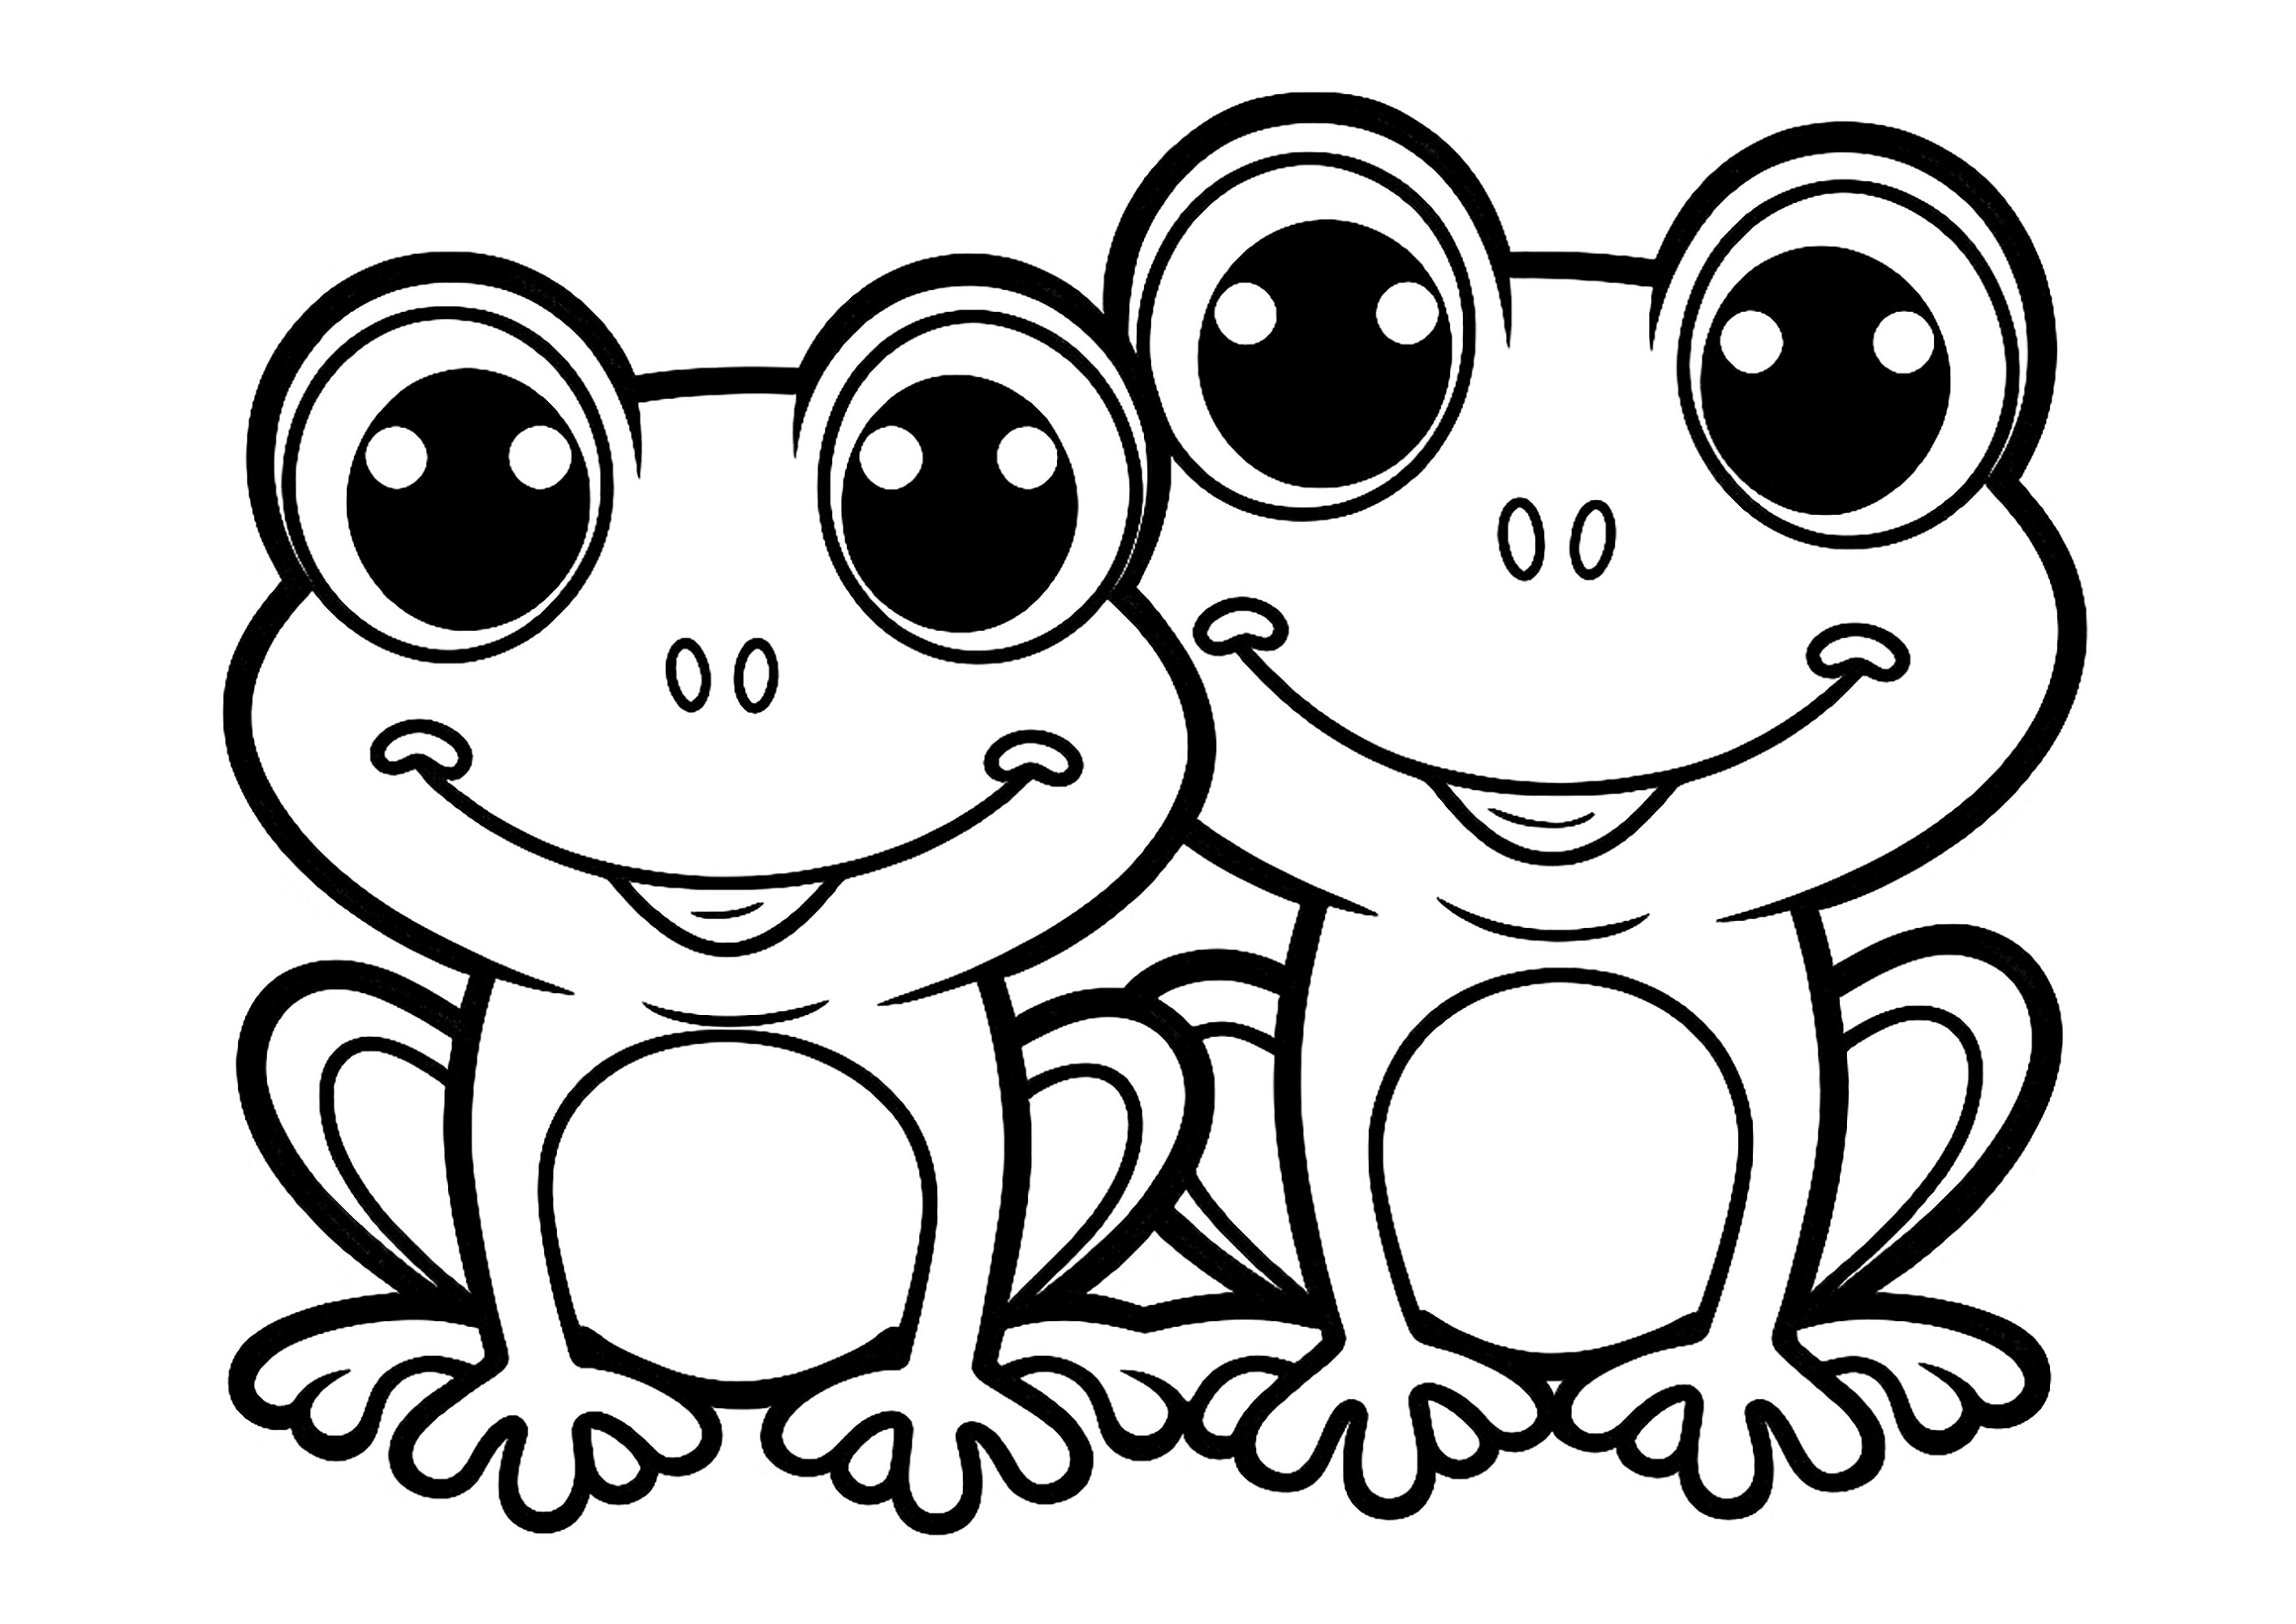 Deux jolies grenouilles